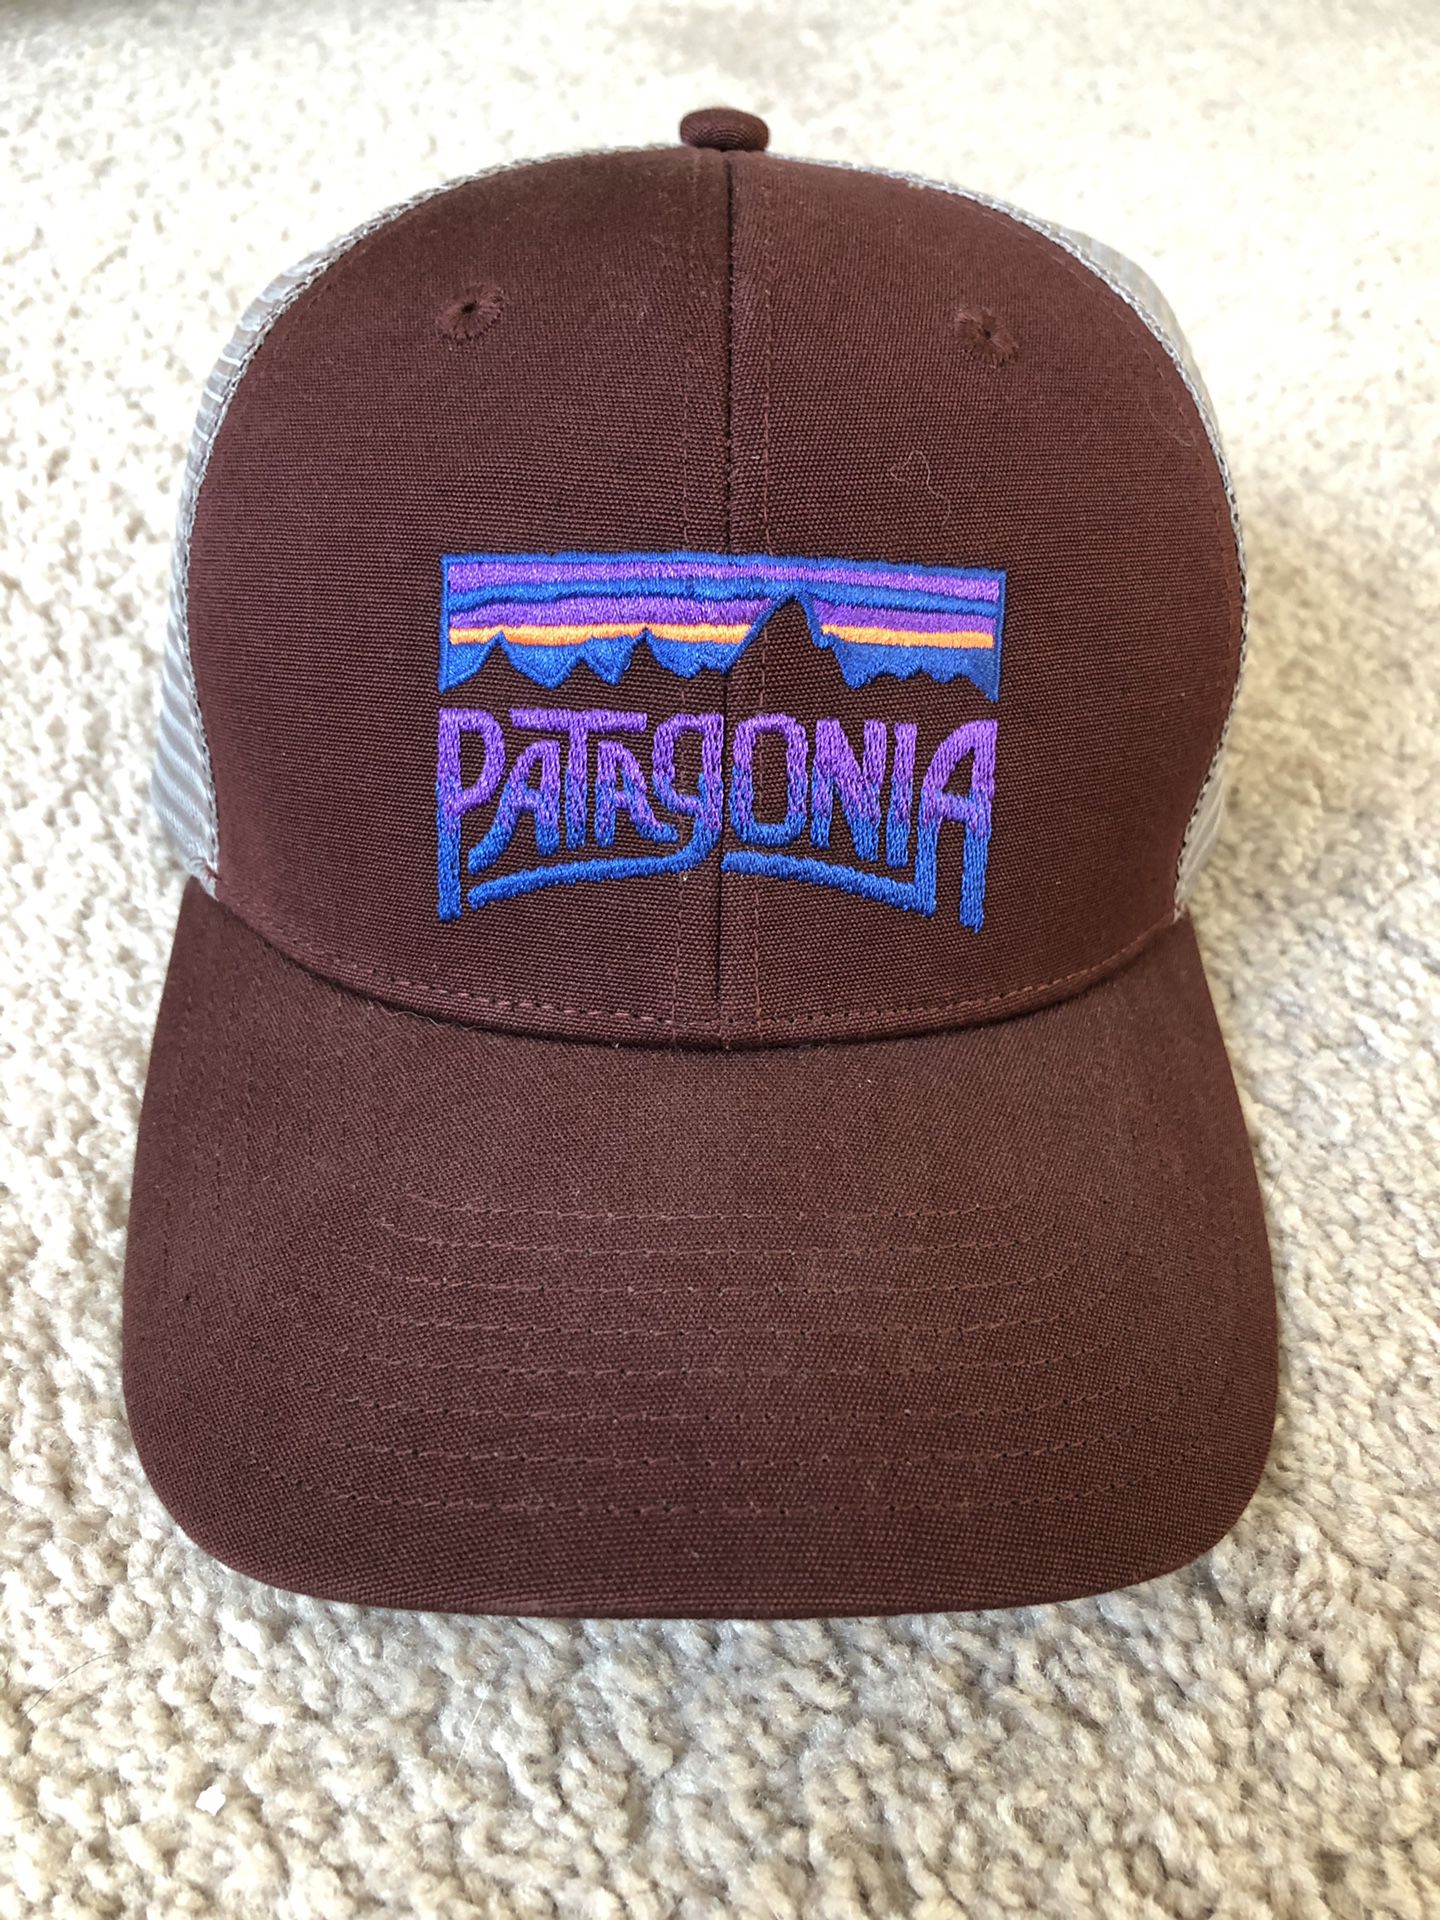 Patagonia Hat